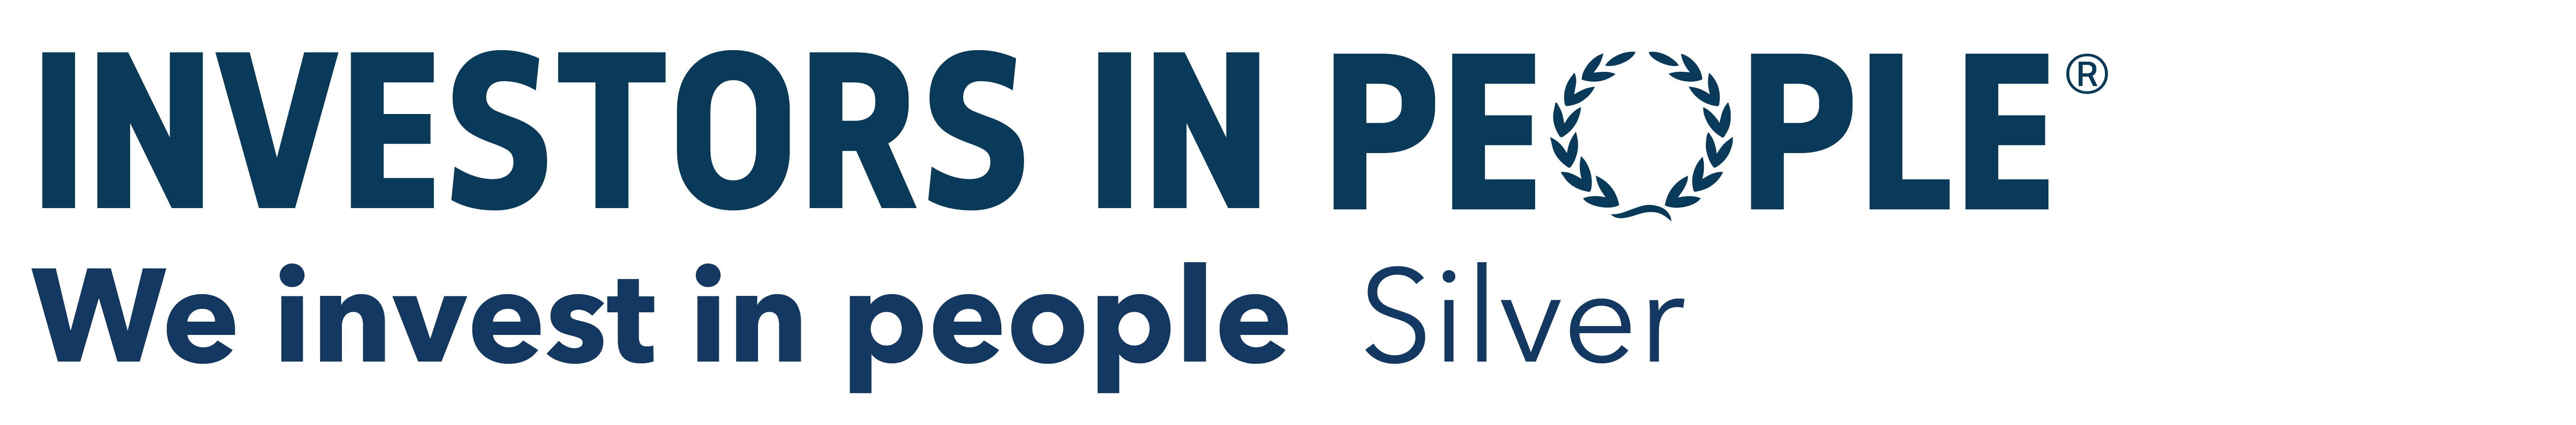 Investors in People - Silver Logo